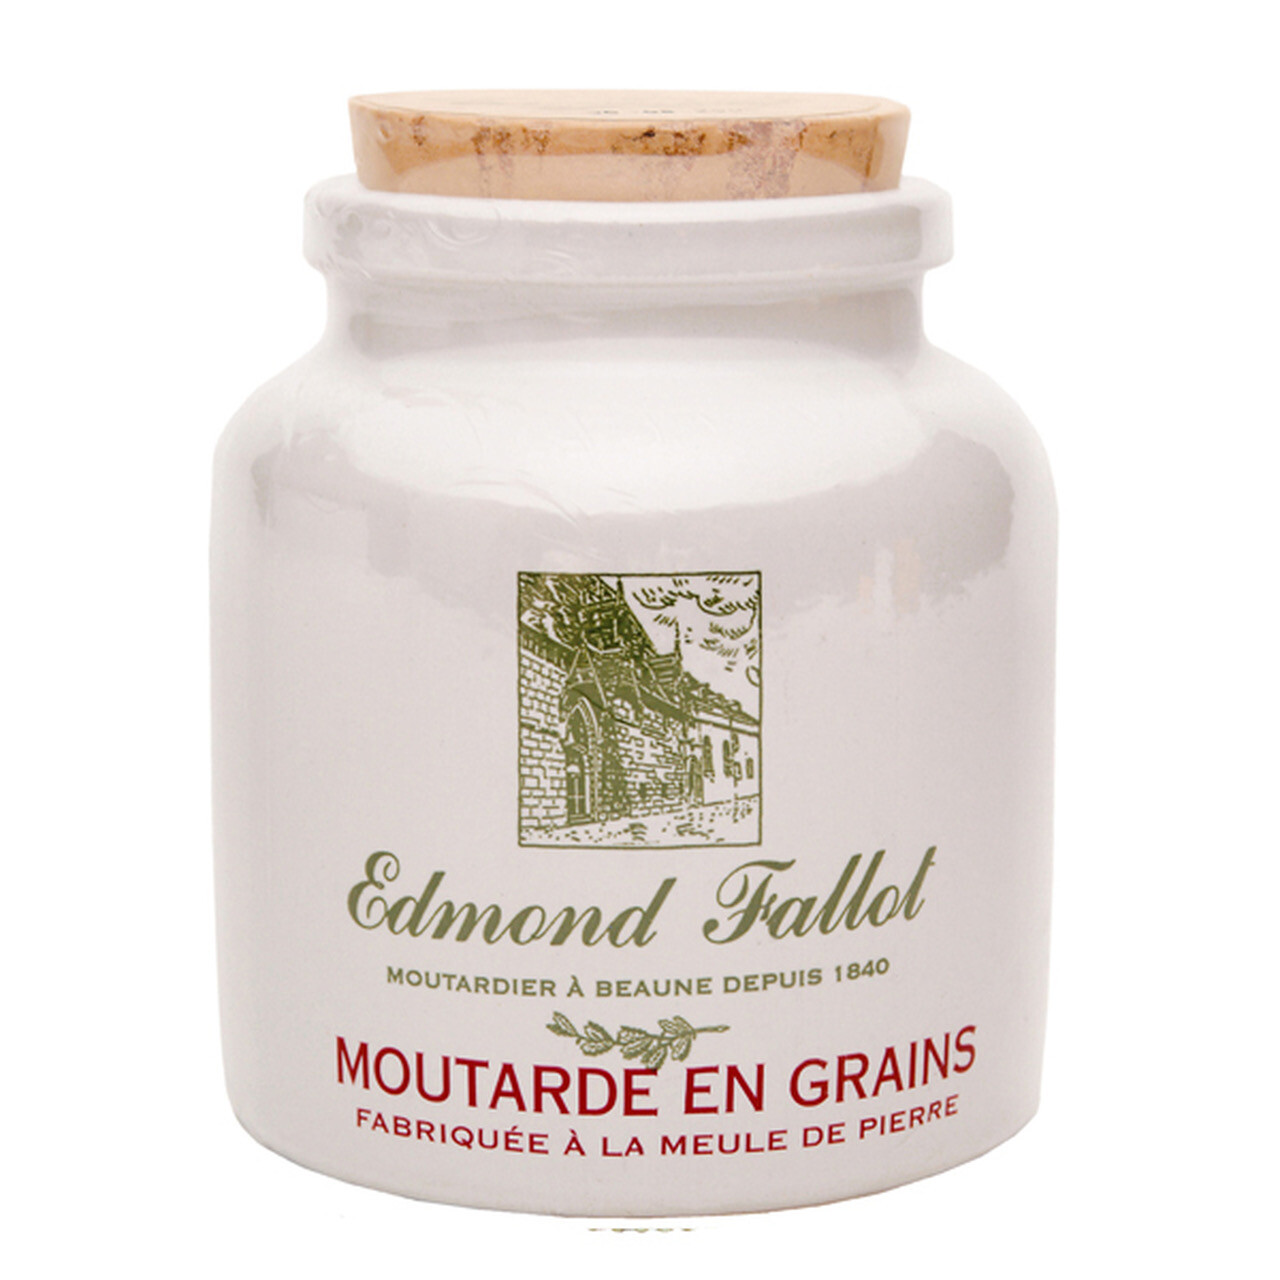 edmond fallot old fashioned grain mustard in stone jar